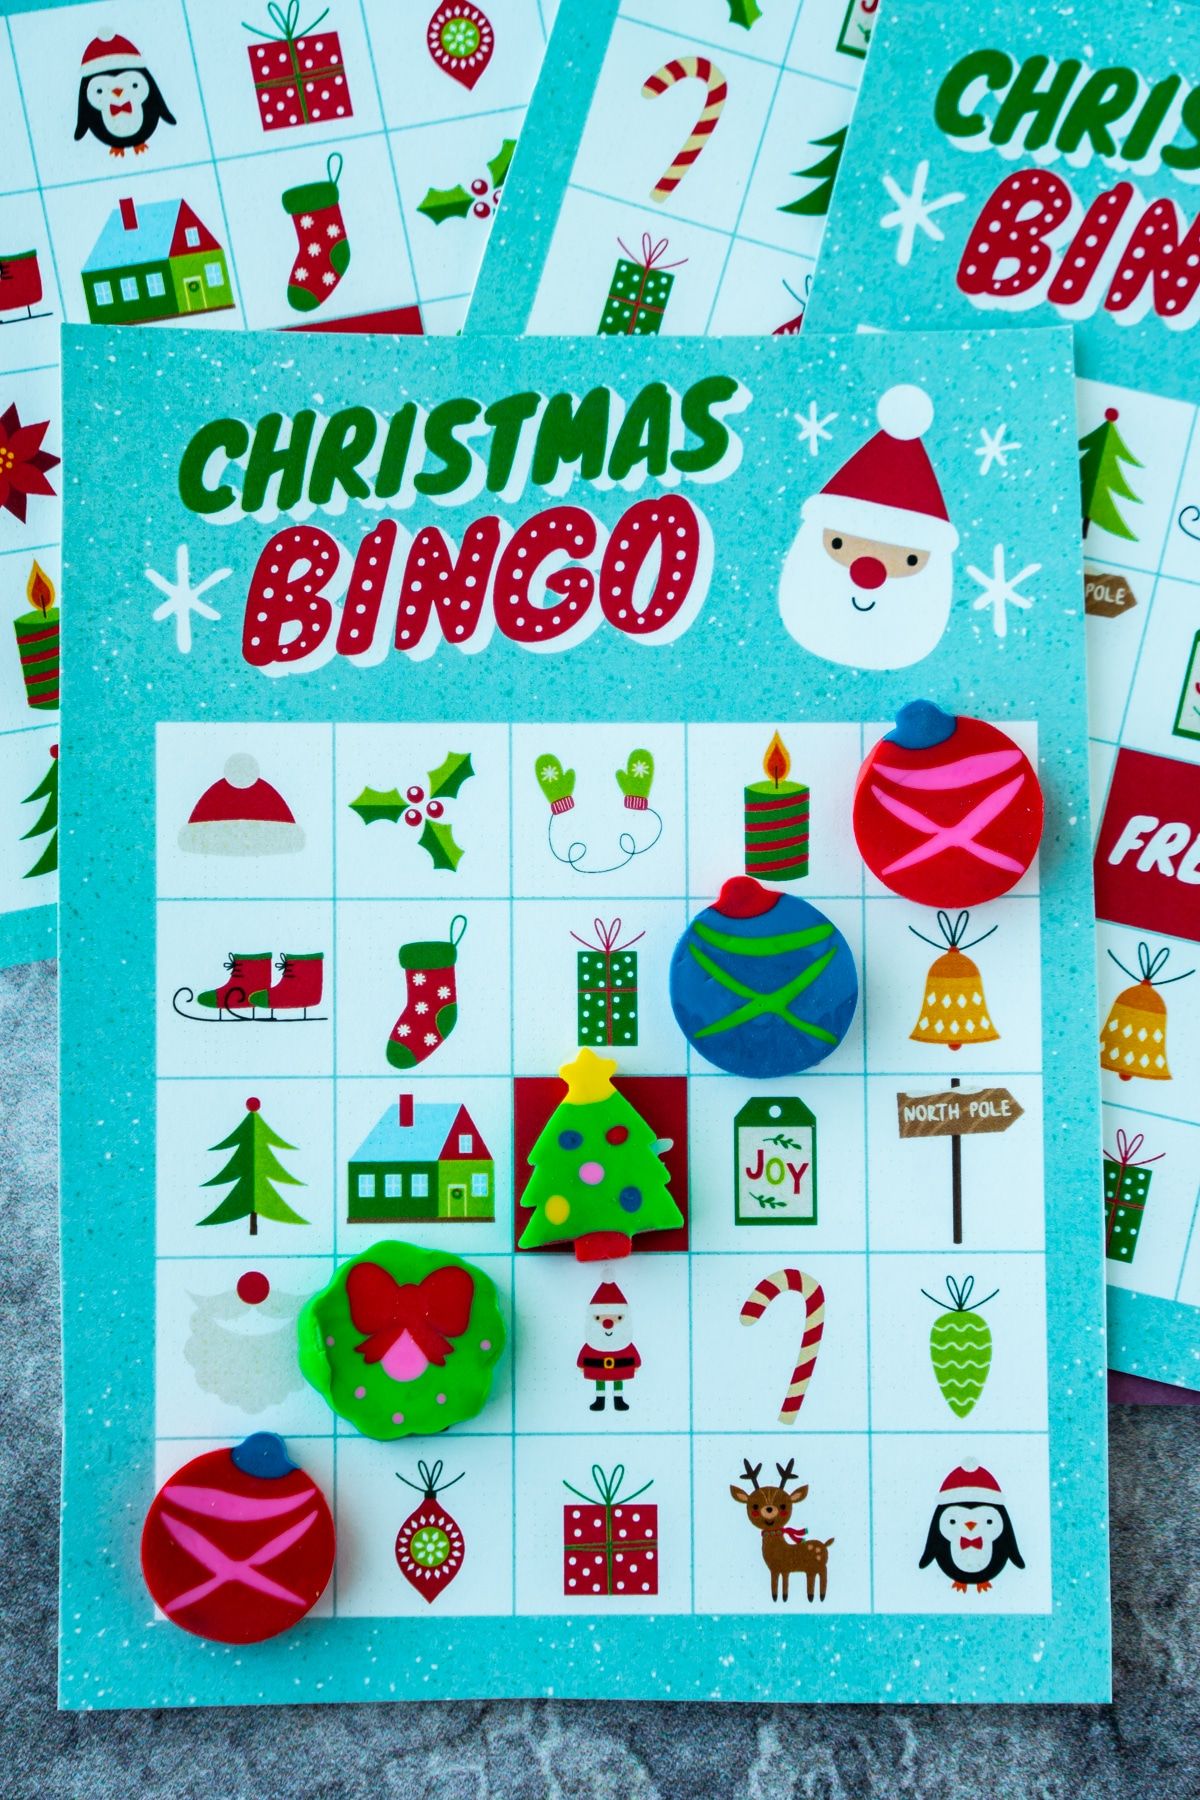 Tarjeta de bingo navideña con borradores navideños en línea